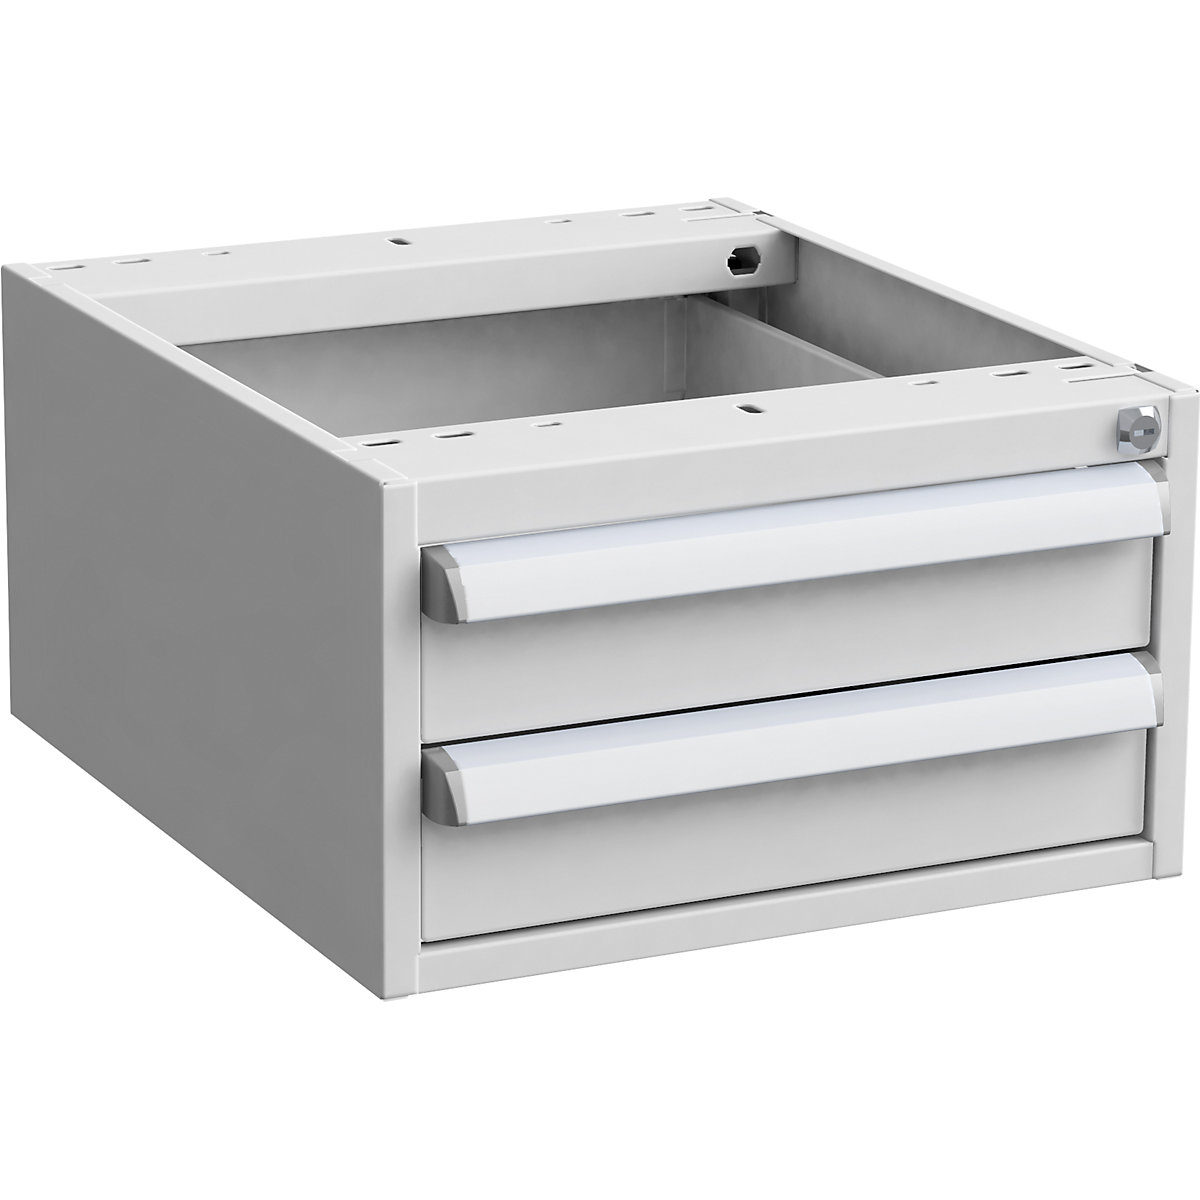 Suspended drawer unit – Treston